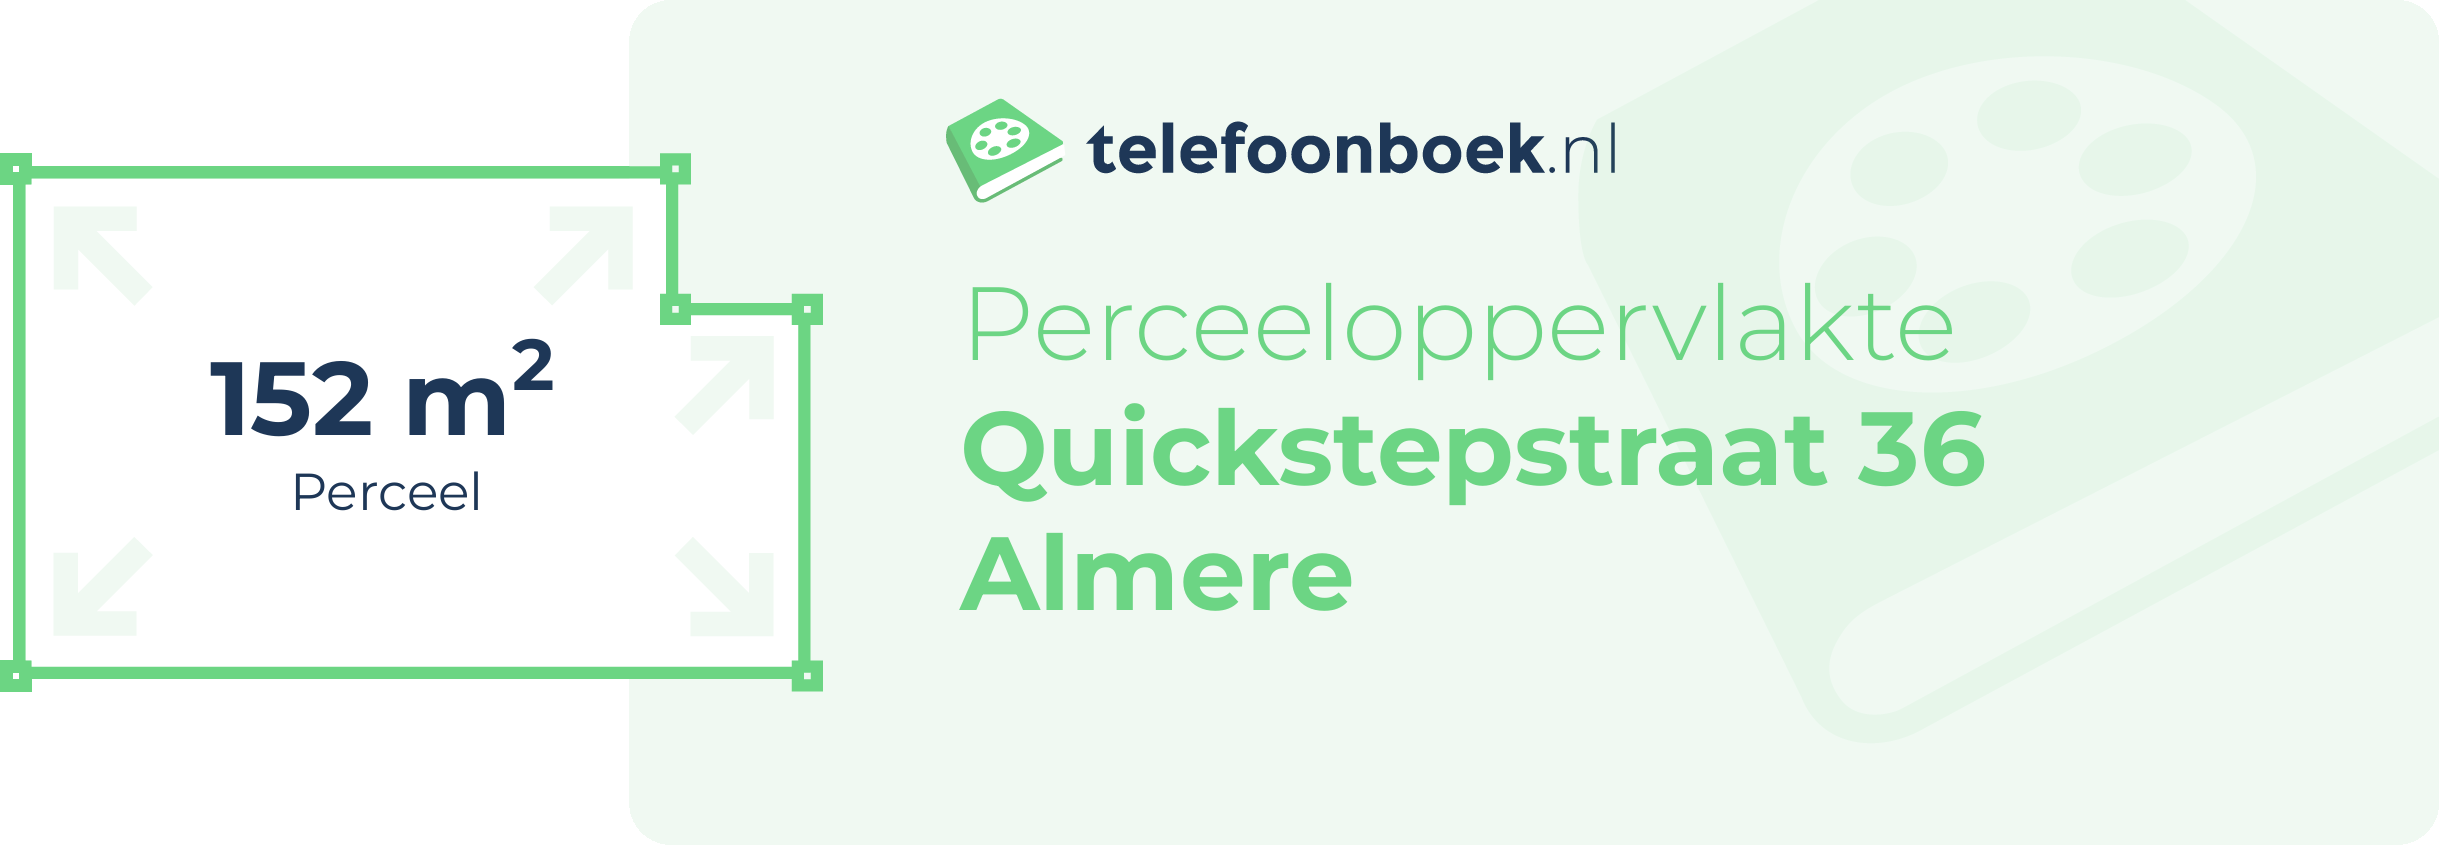 Perceeloppervlakte Quickstepstraat 36 Almere